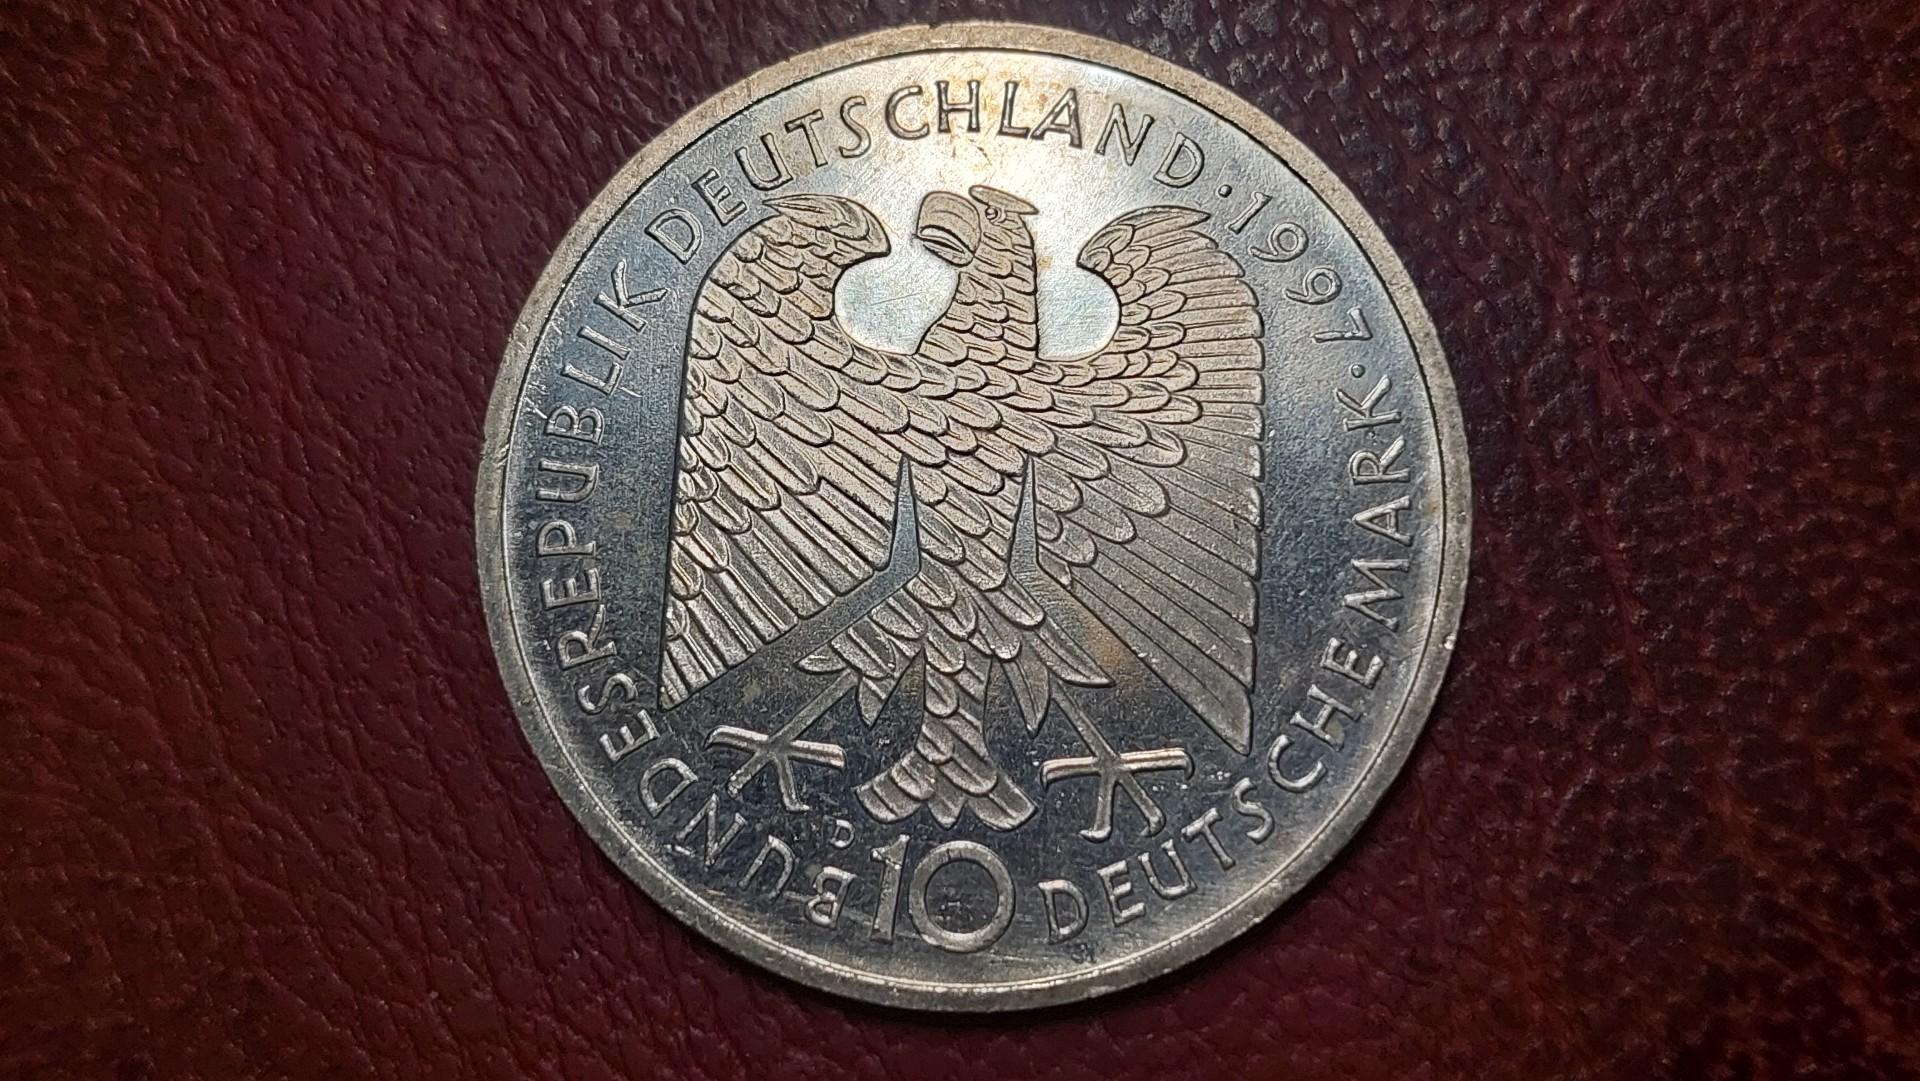 Vokietija 10 markių, 1997D KM# 190